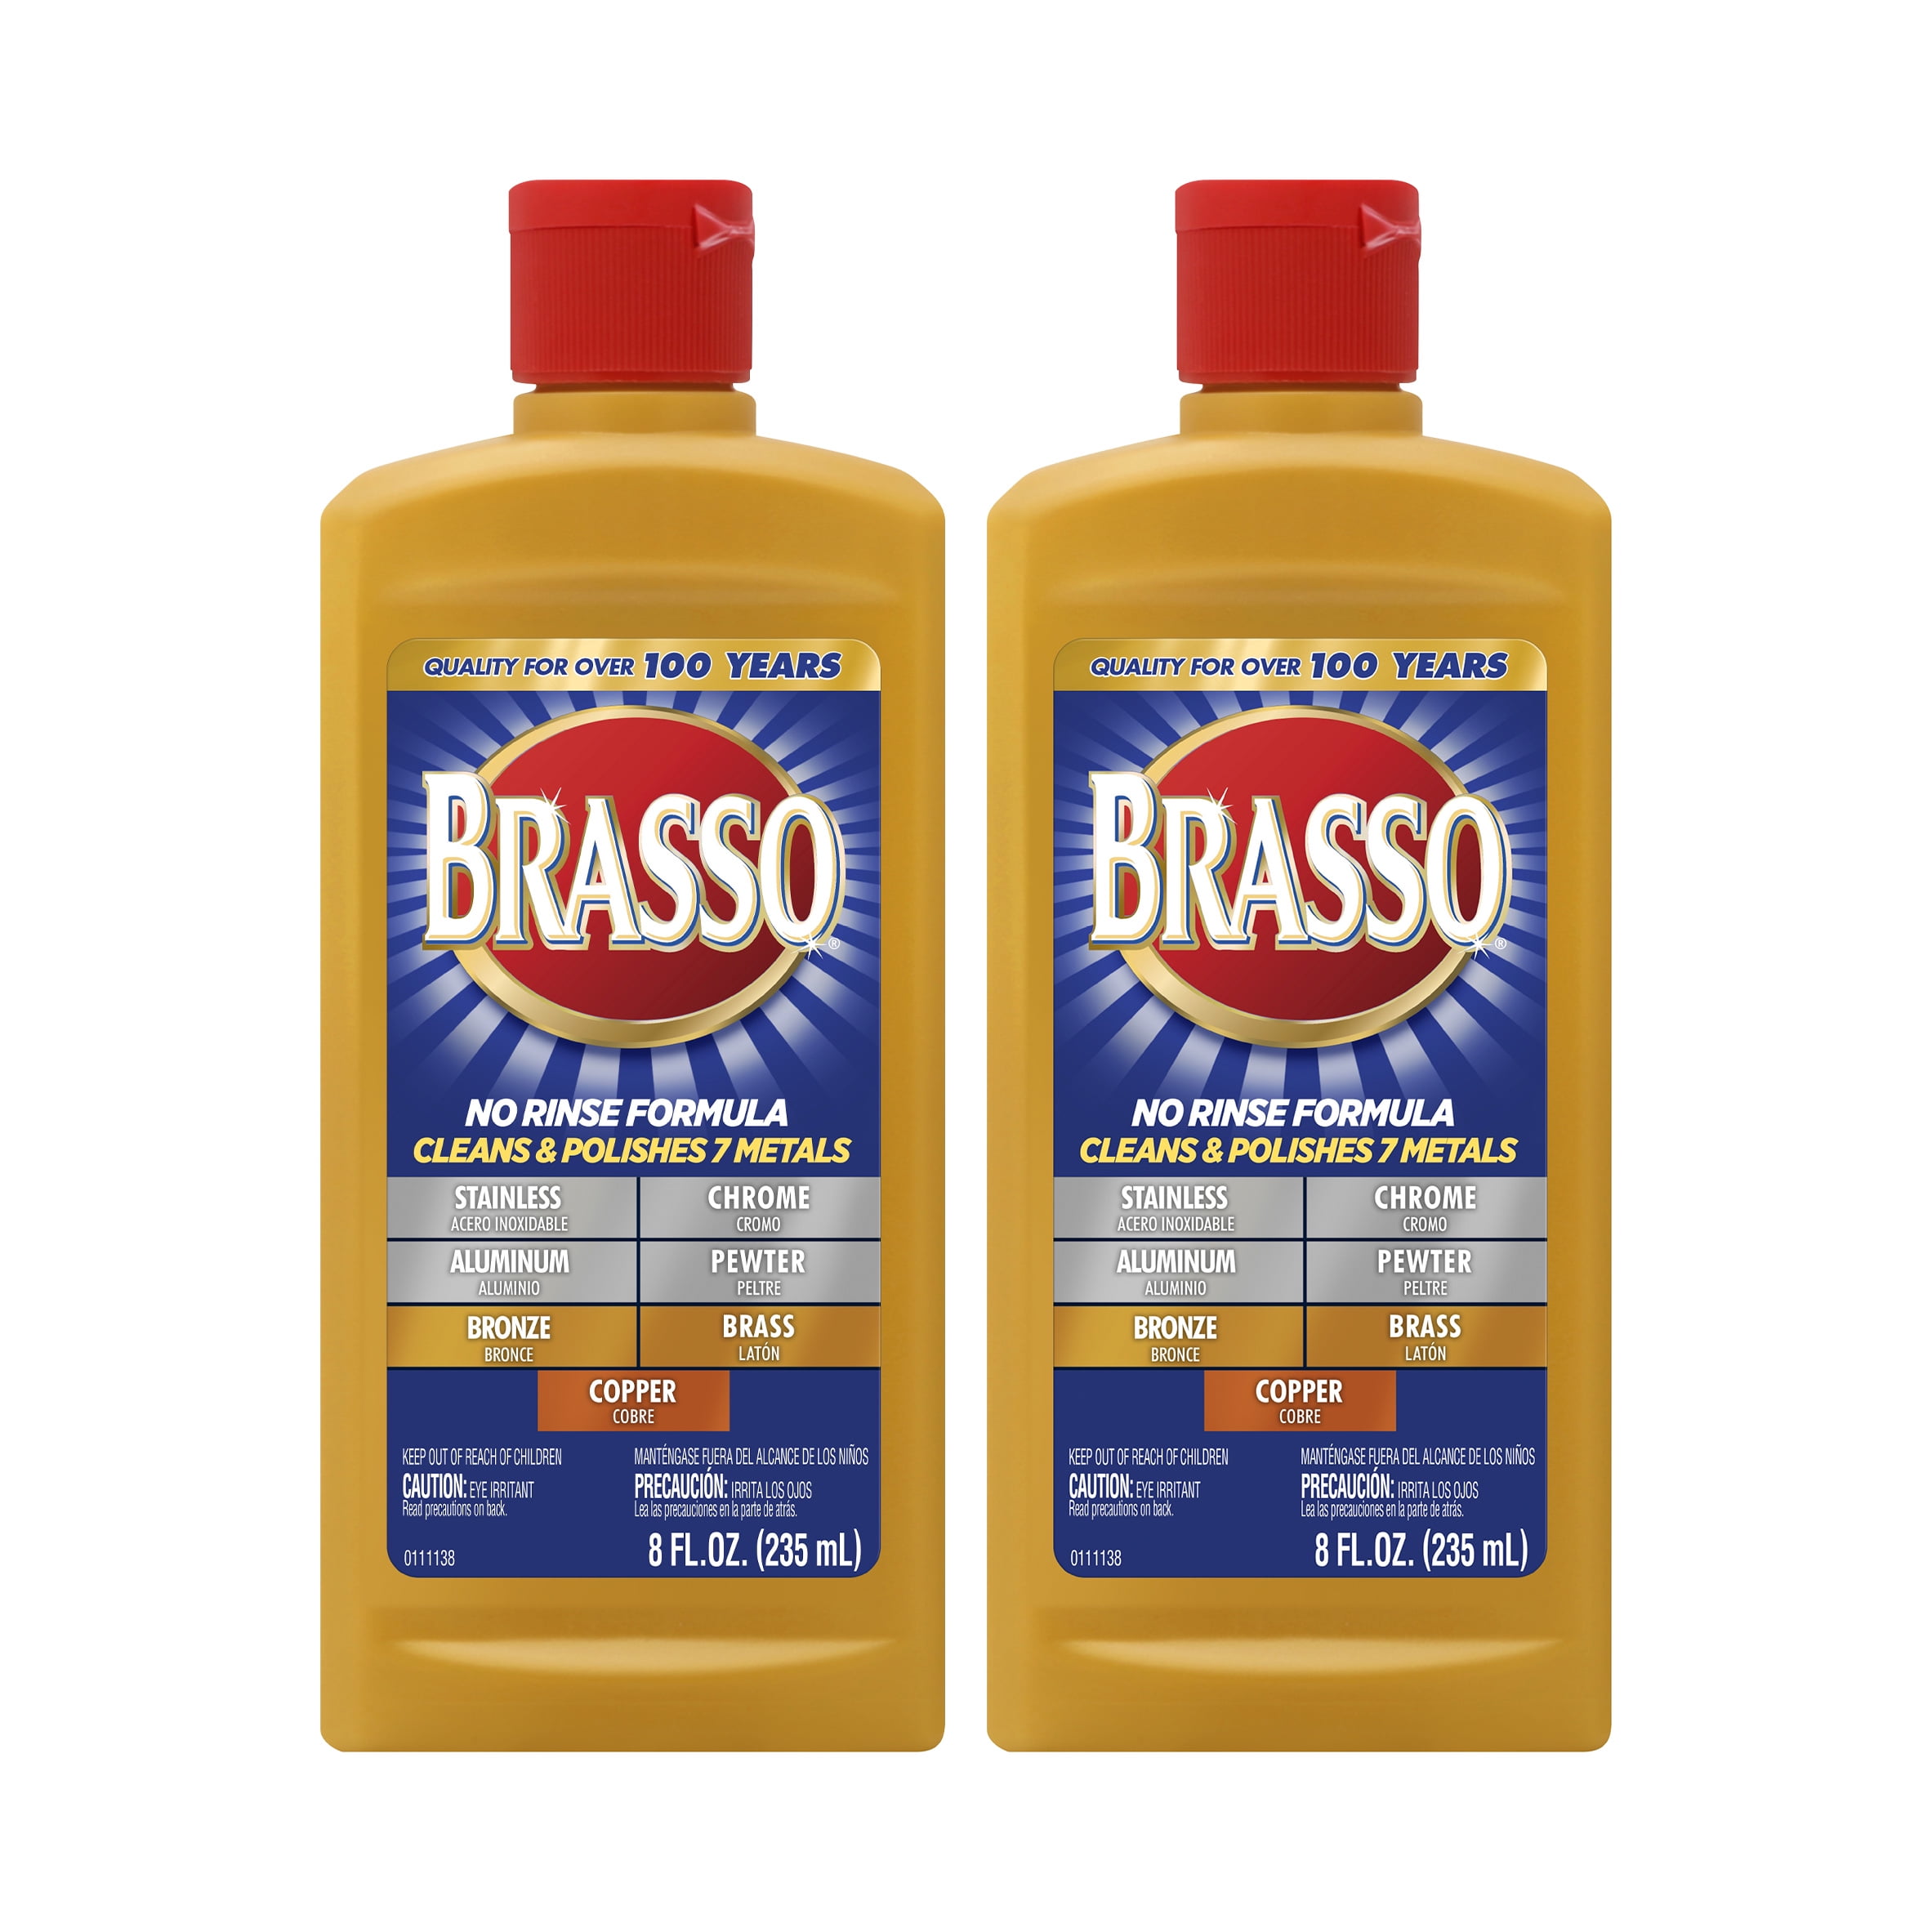 Polishing brass with Brasso. How do you polish your brass/copper